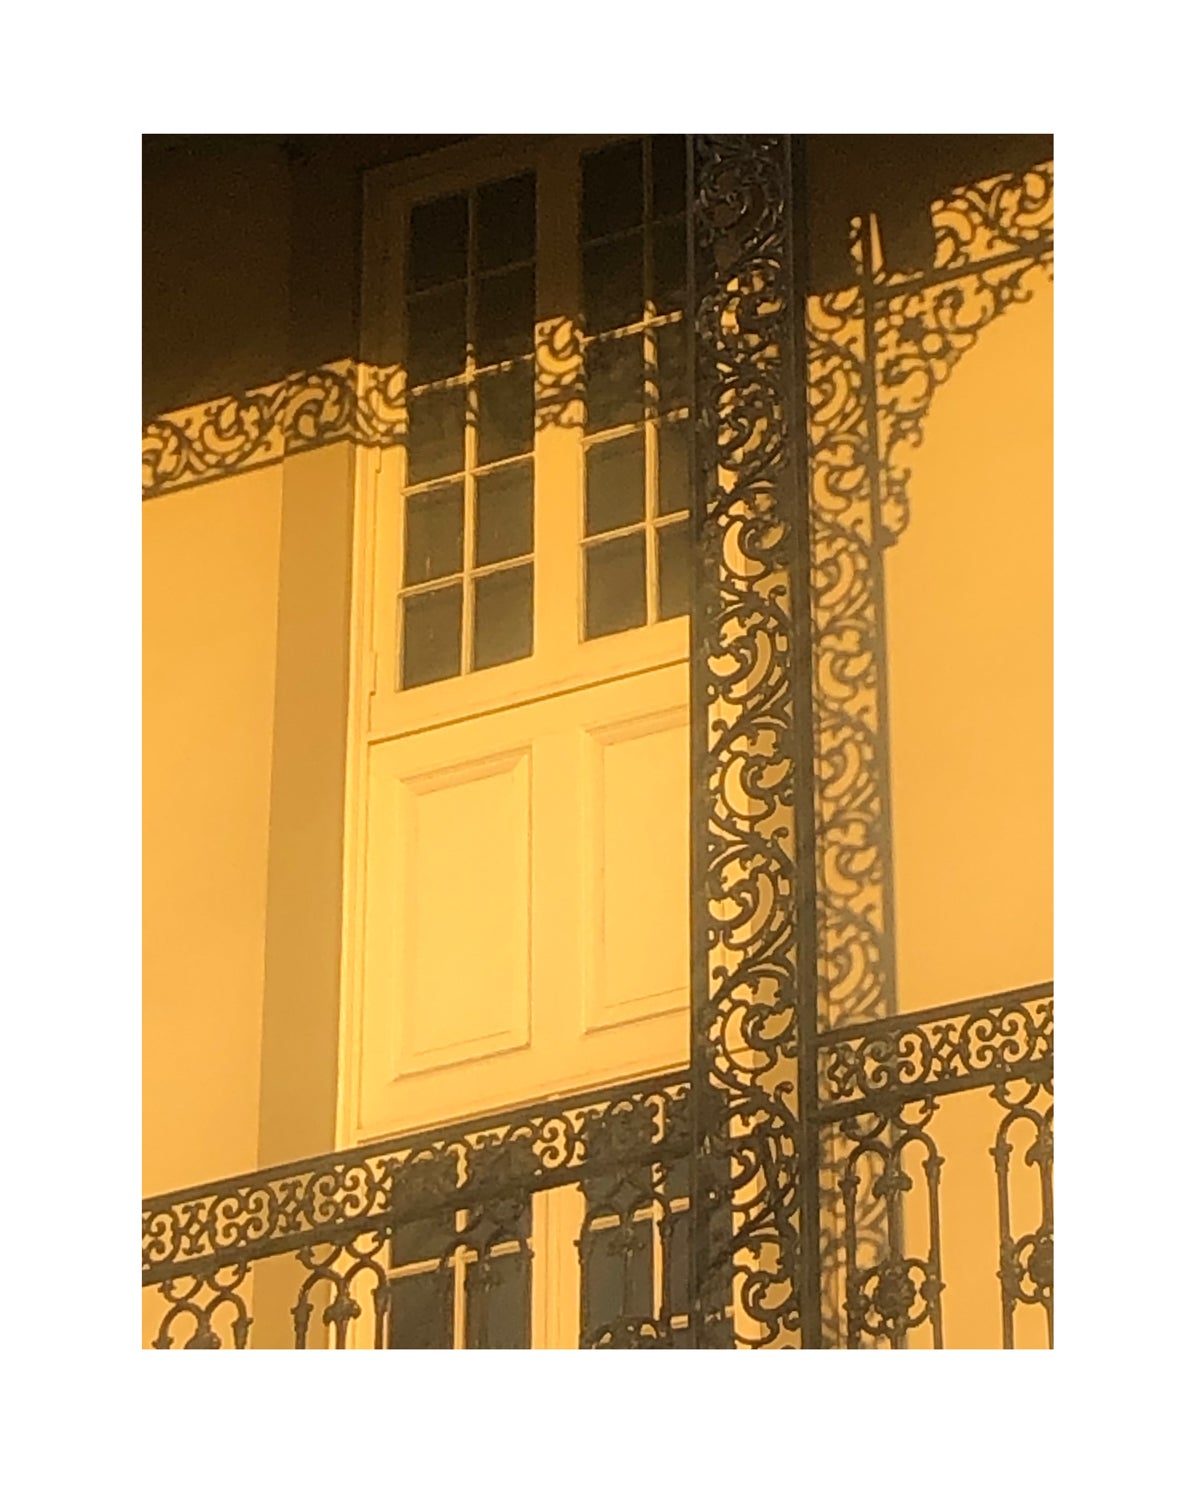 Photo of railings casting unusual shadow by Molly Olwig